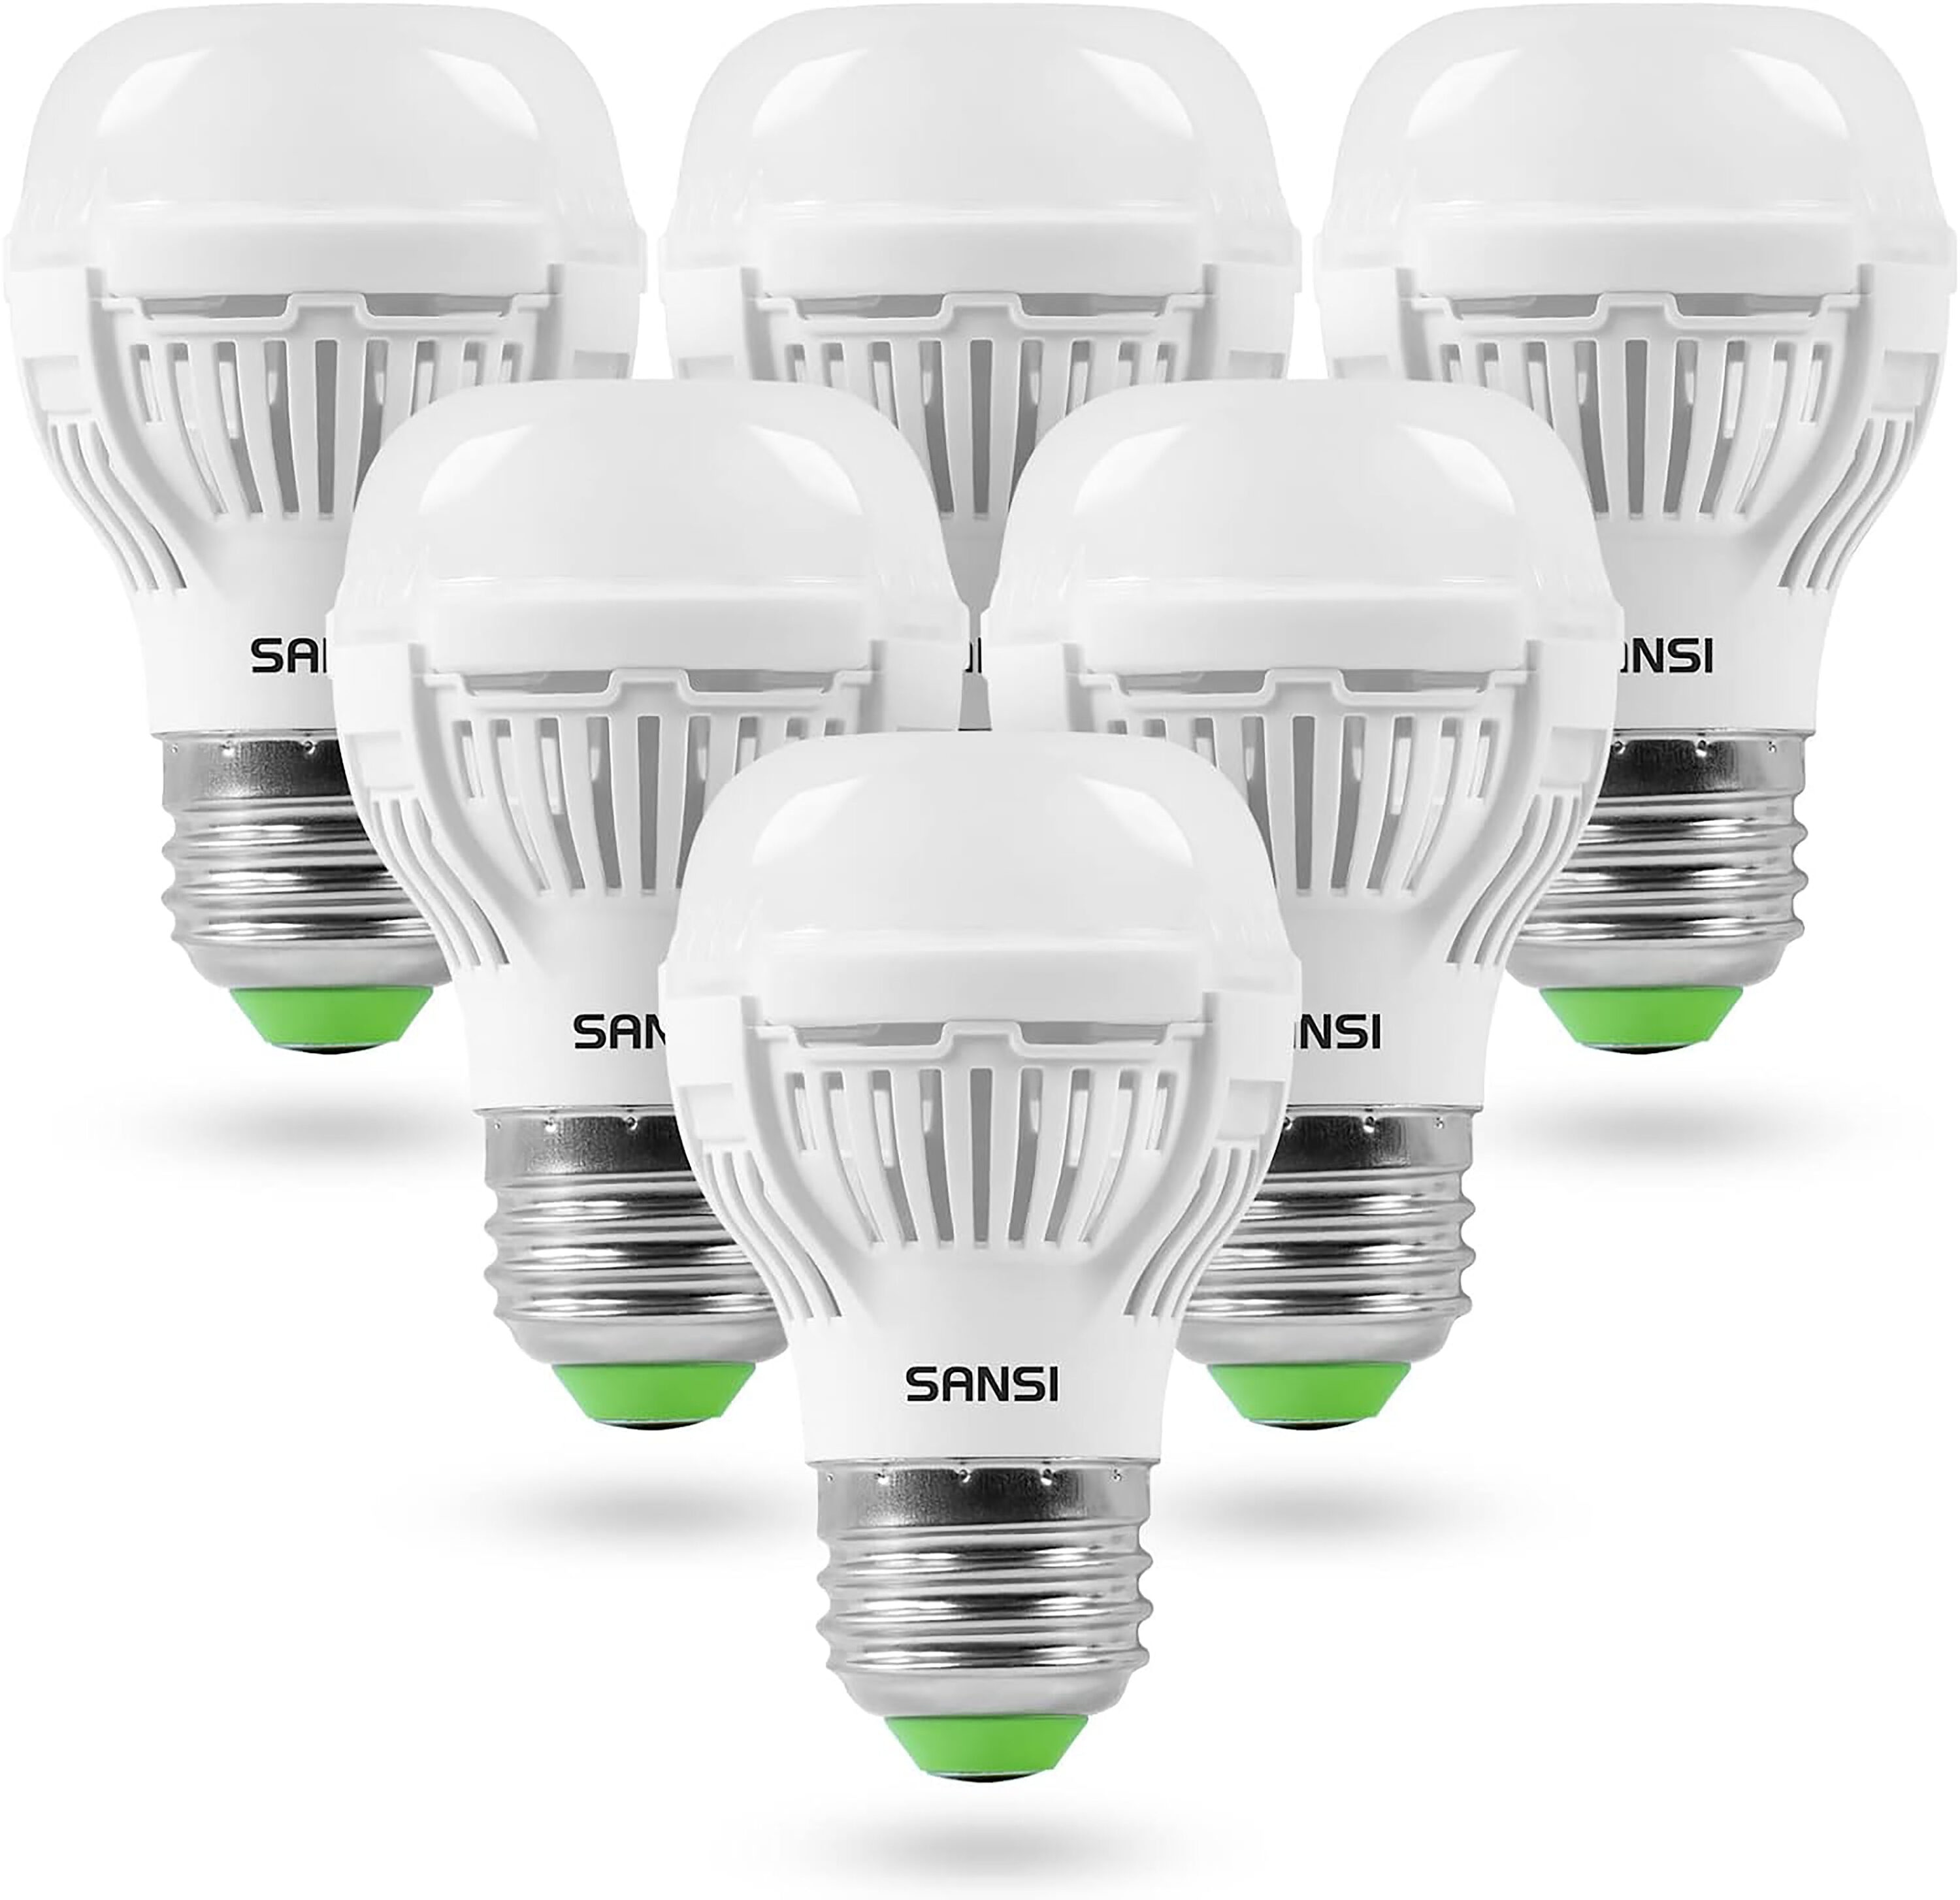 SANSI SANSI 60W Equivalent LED Light Bulbs, 6 Pack 900 Lumens Bulb, 3000K Soft White E26, A15 Efficient, Safe Saving for Home Lighting in the General Purpose LED